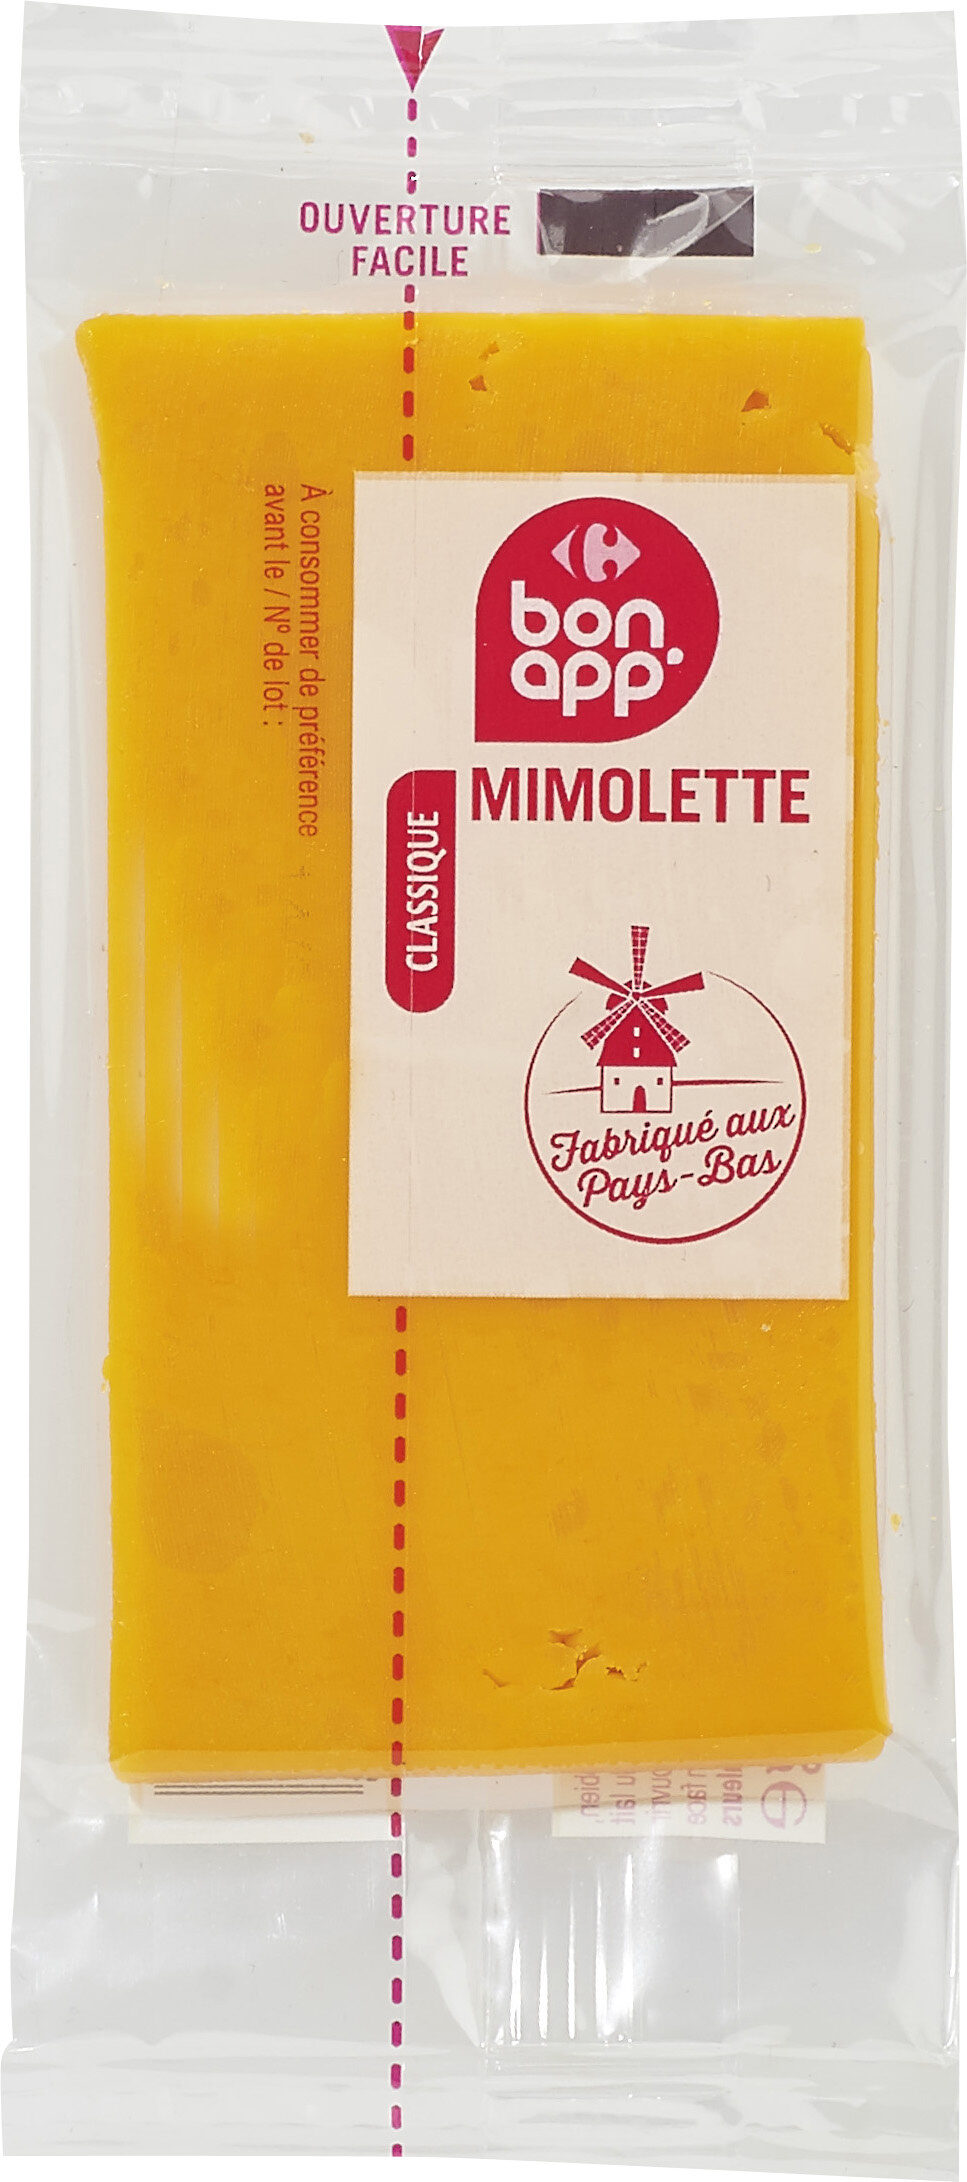 Mimolette - Product - fr